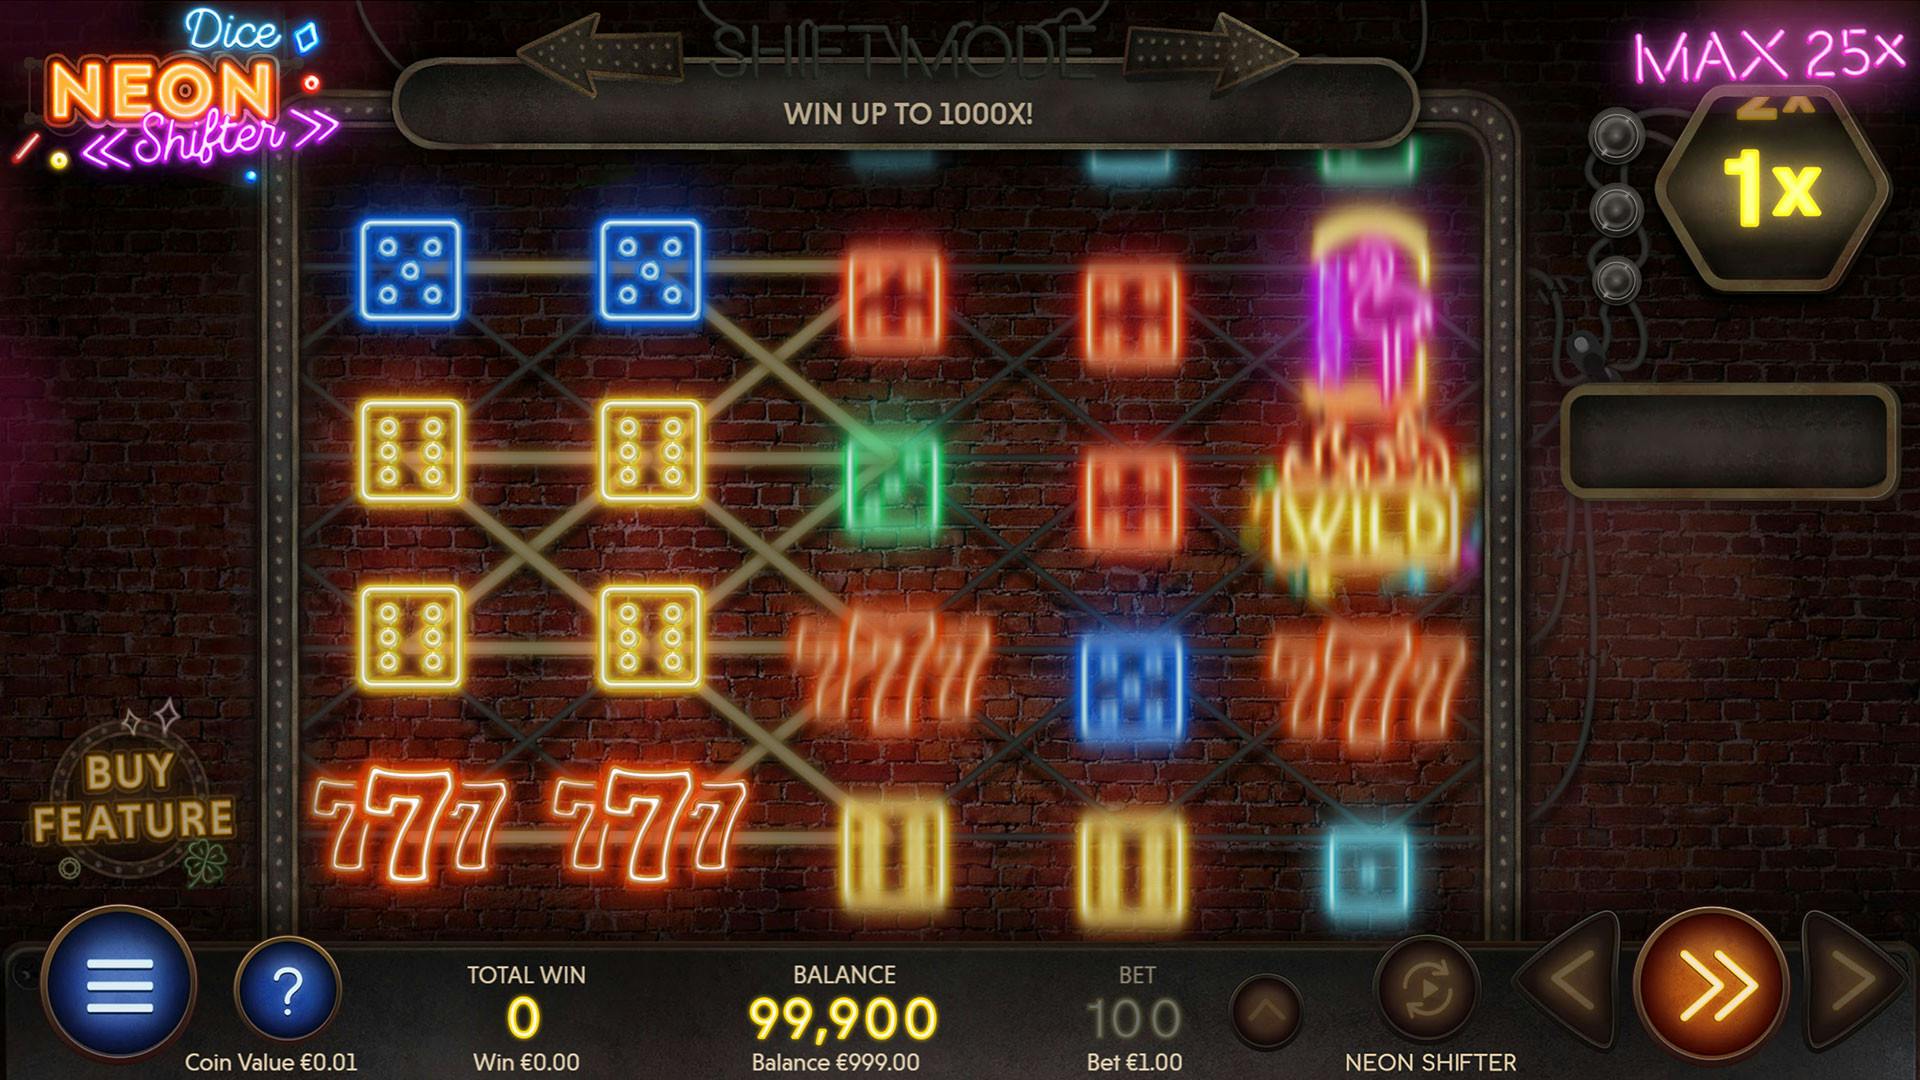 Airdice Neon Shifter dice slot spel, multipliers waanzin.